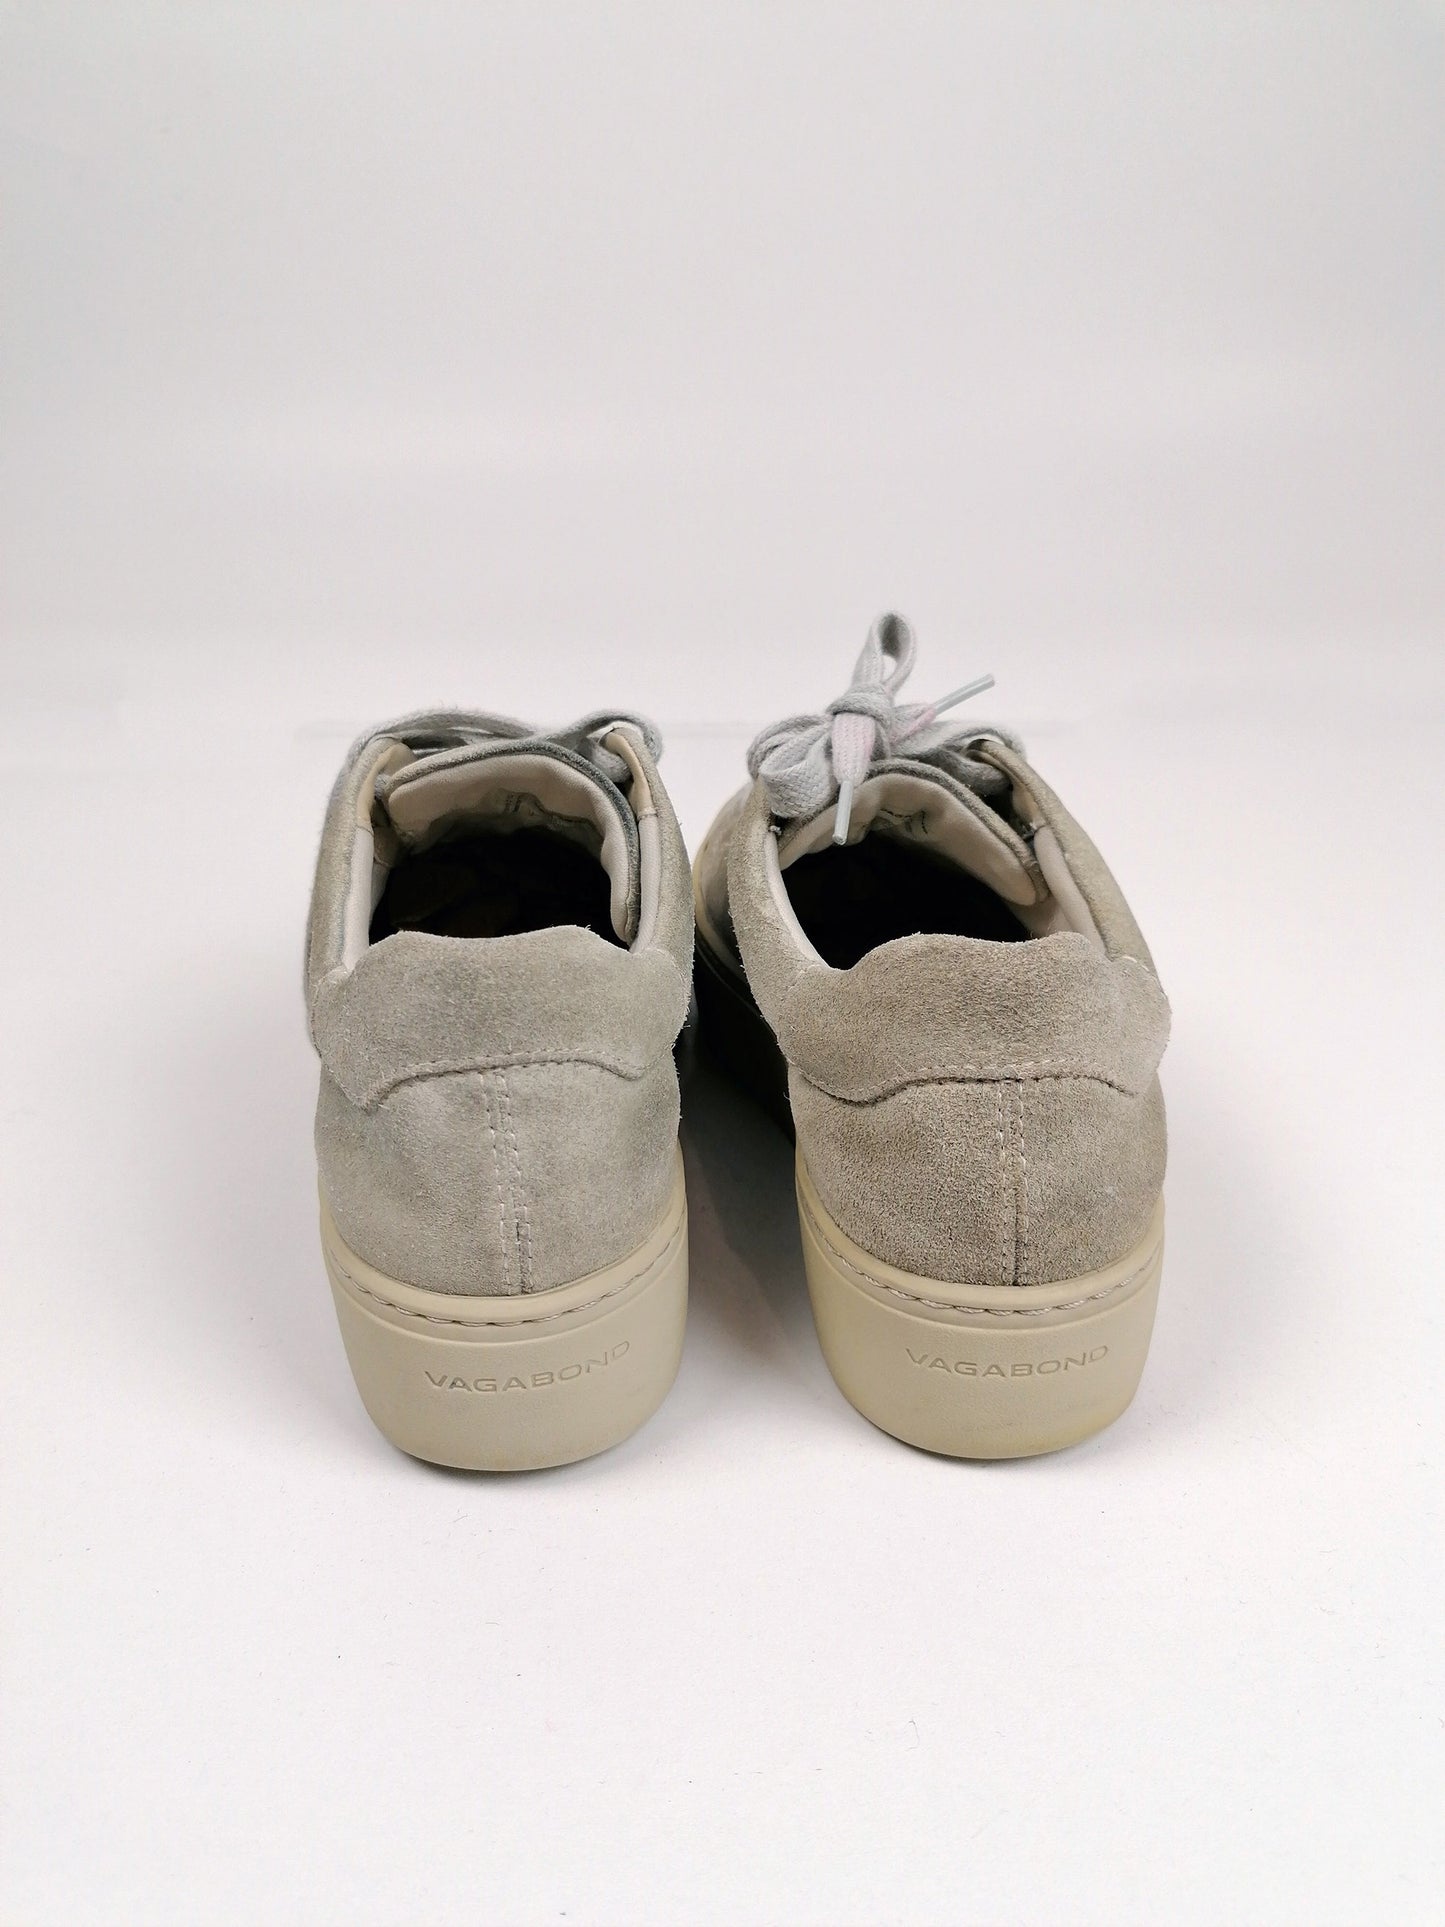 Y2K VAGABOND Platform Sneakers Suede - size EU 37 / us 6.5 / UK 4.5